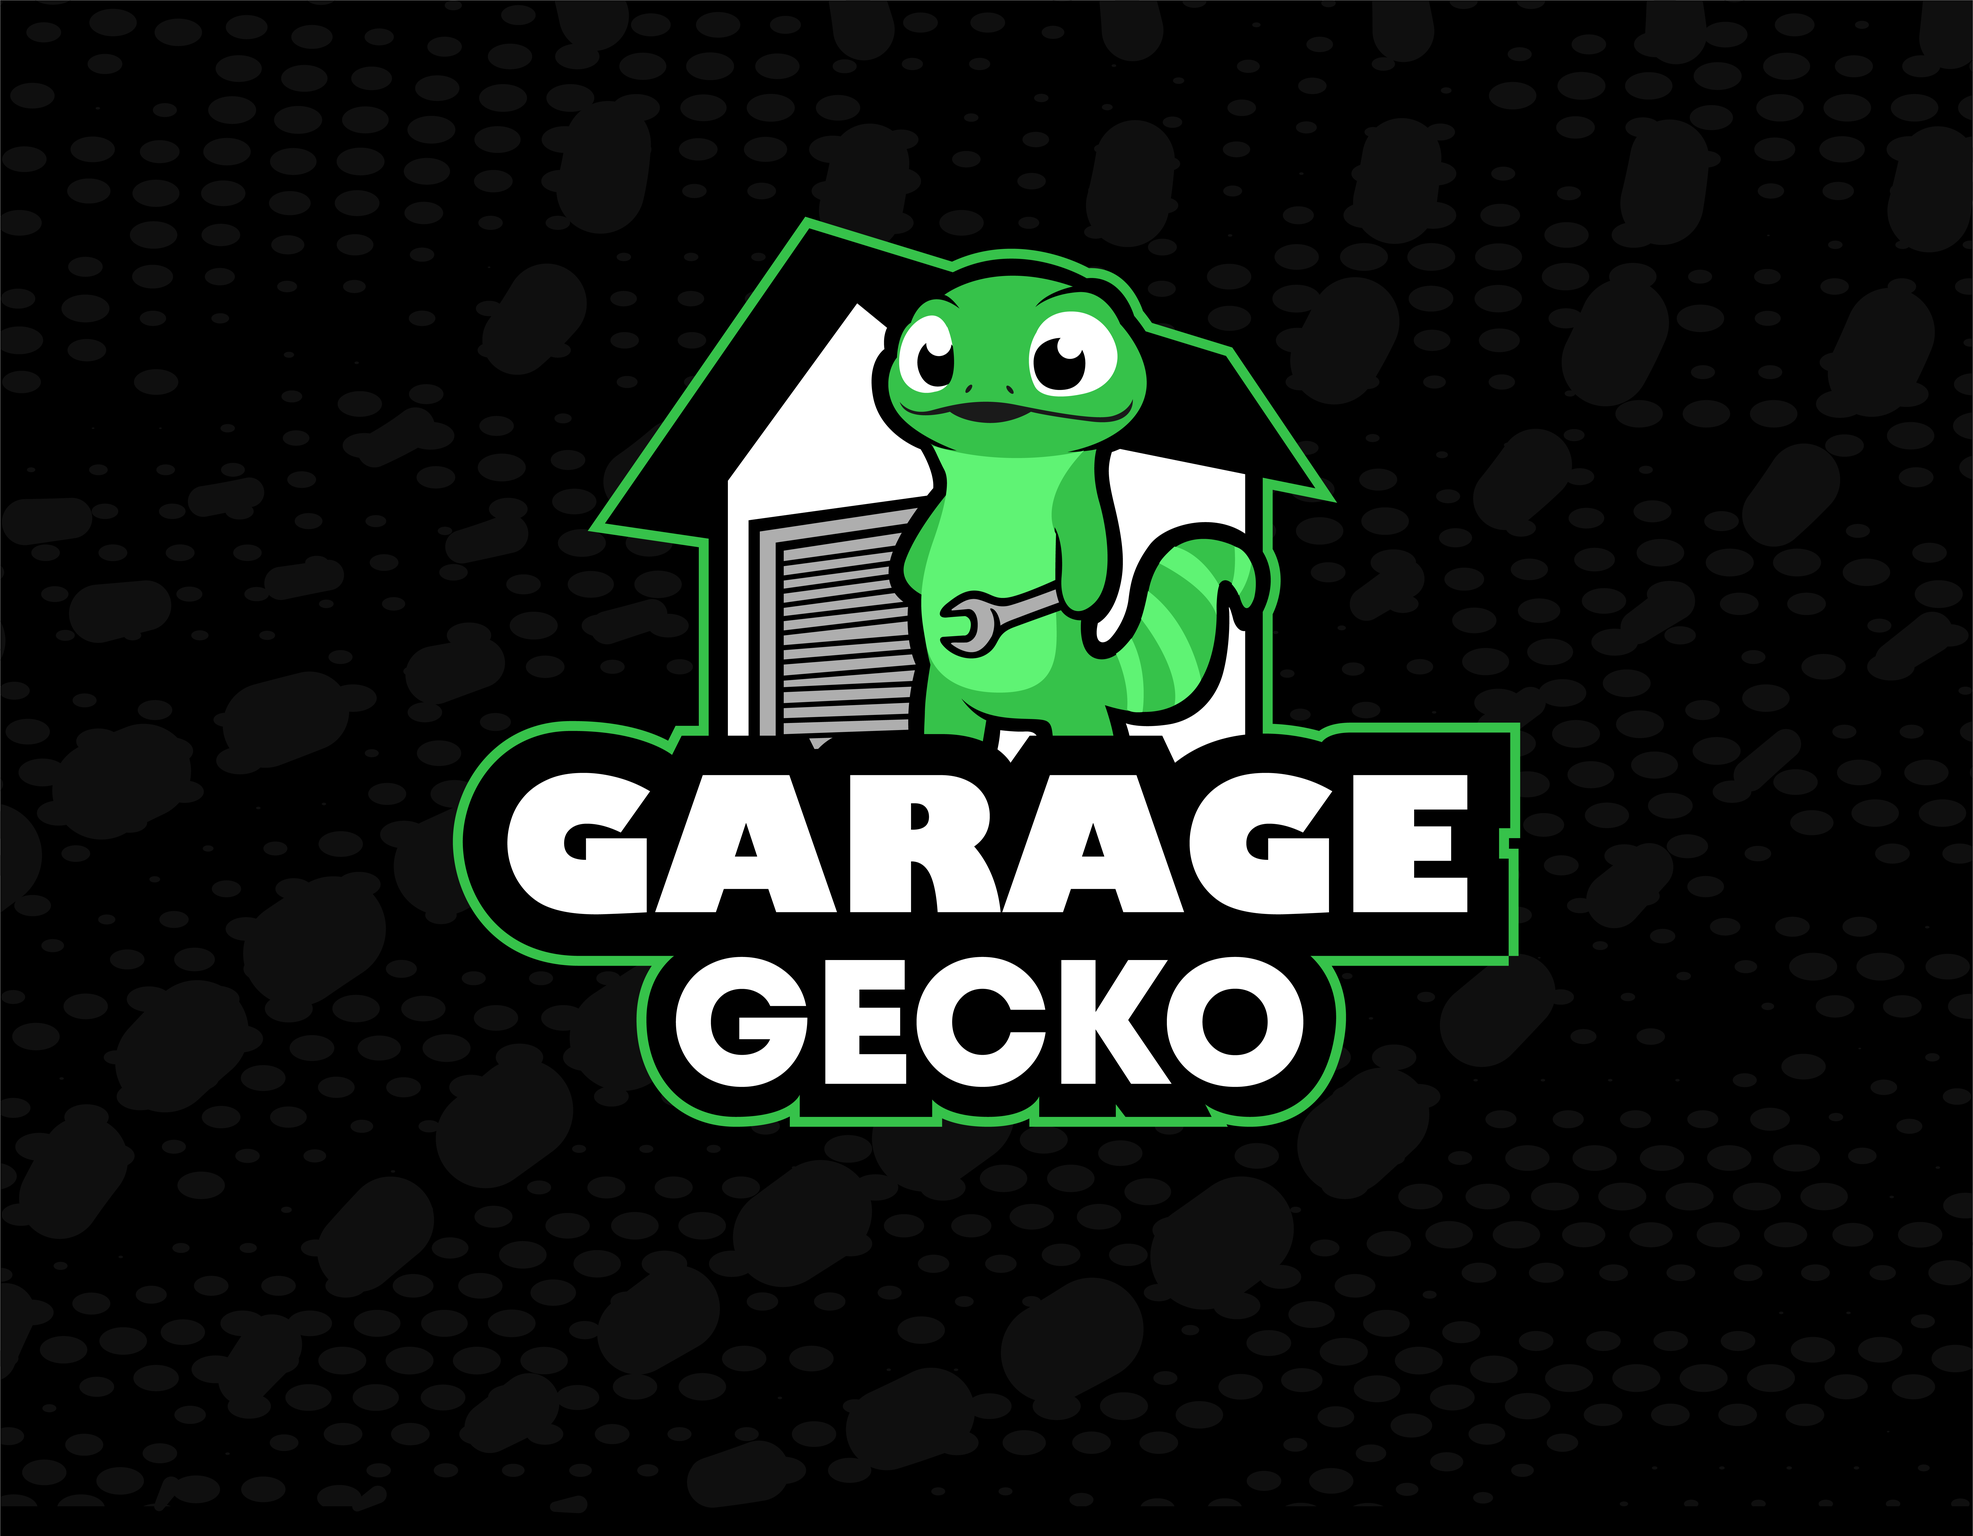 Garage Gecko logo on black background